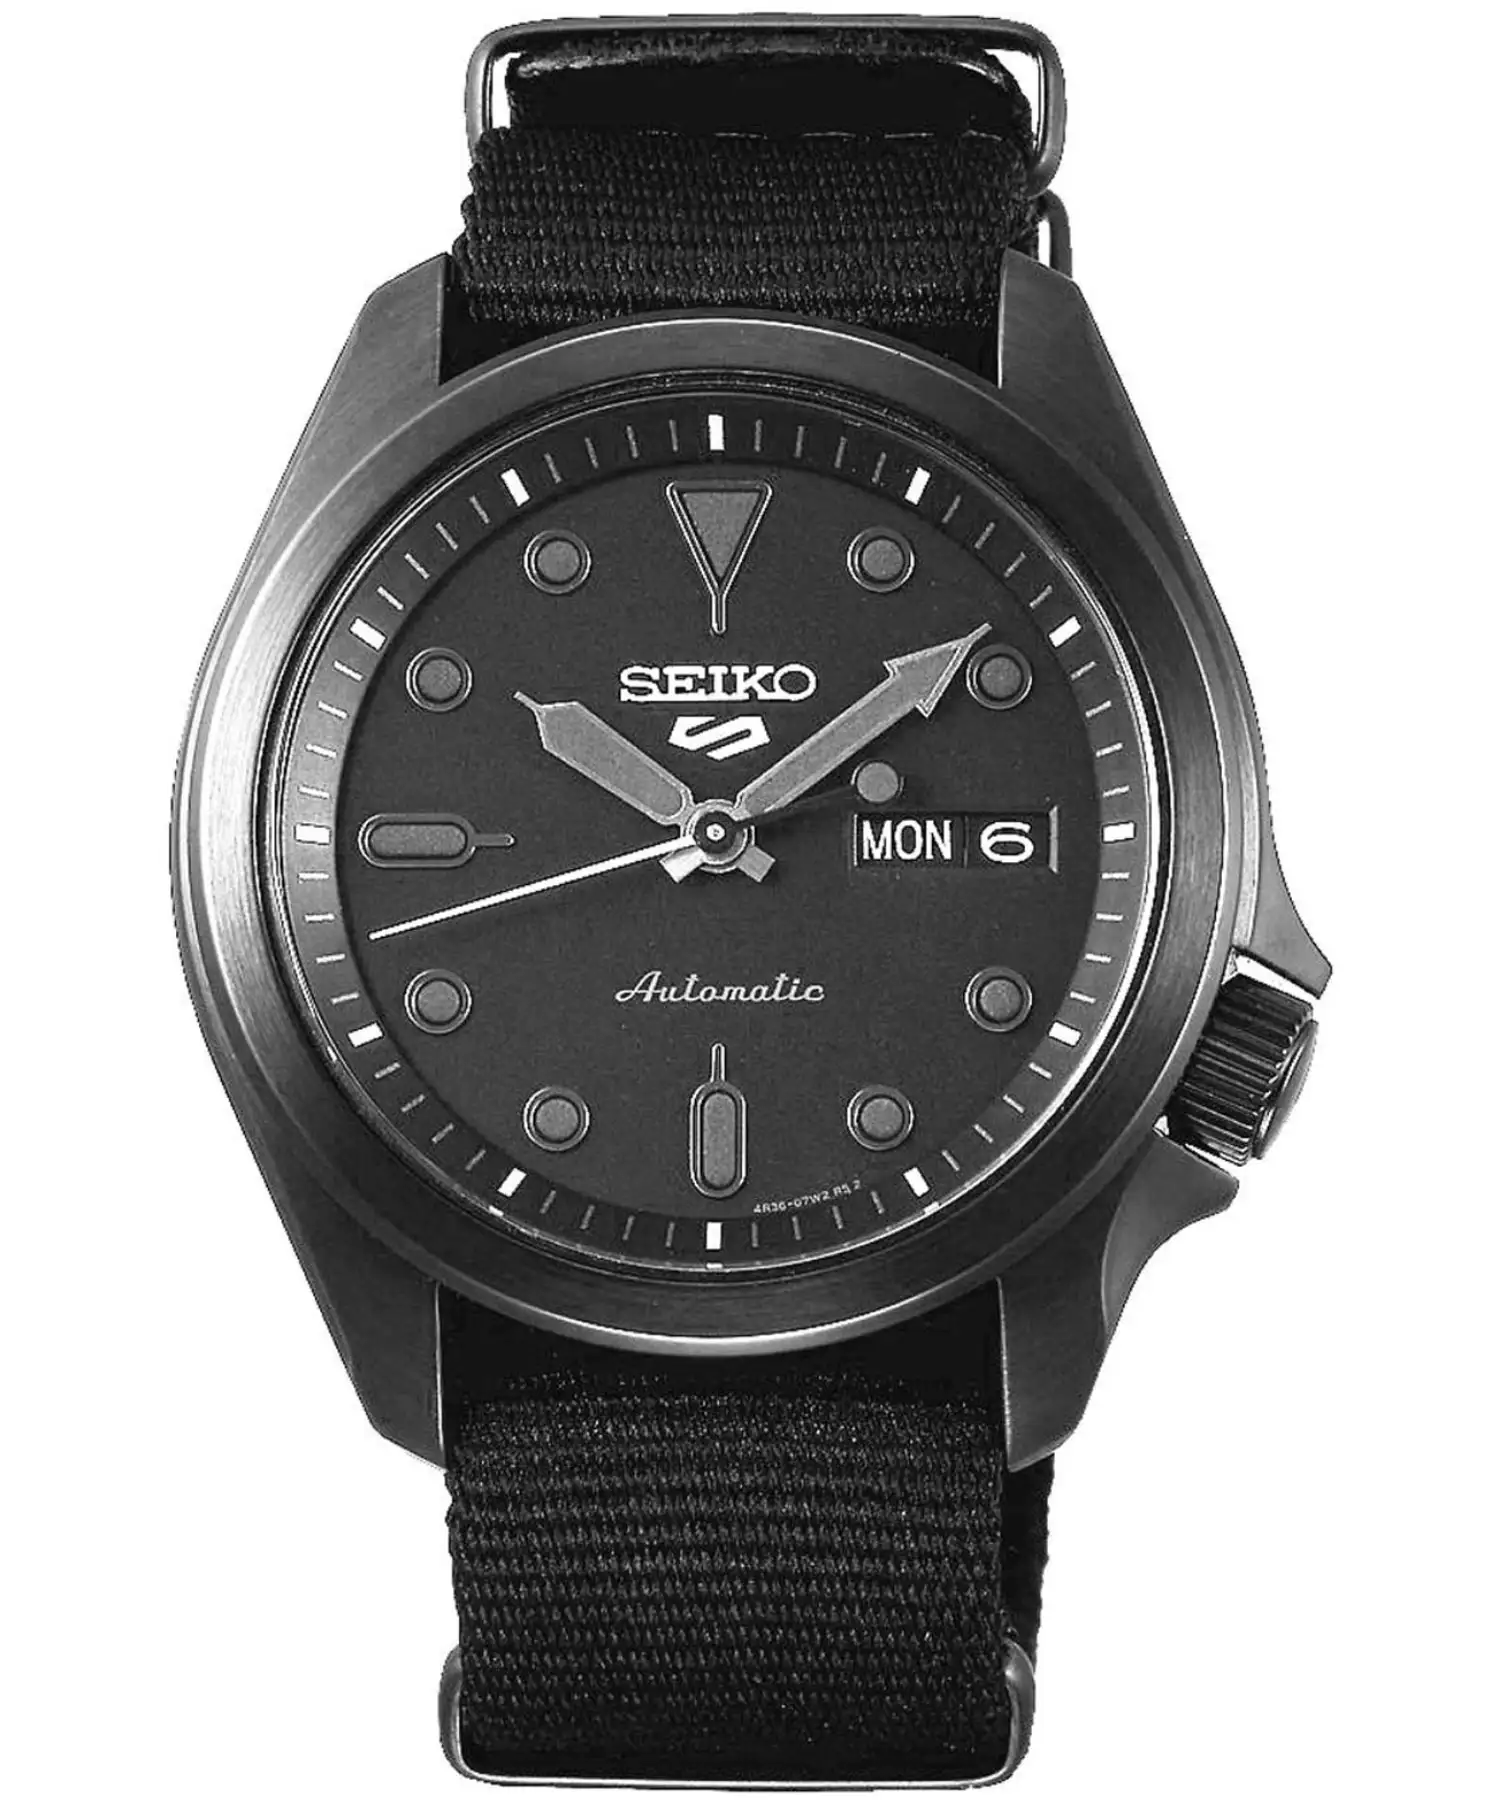 picture ساعت مچی مردانه سیکو، زیرمجموعه Seiko 5, کد SRPE69K1